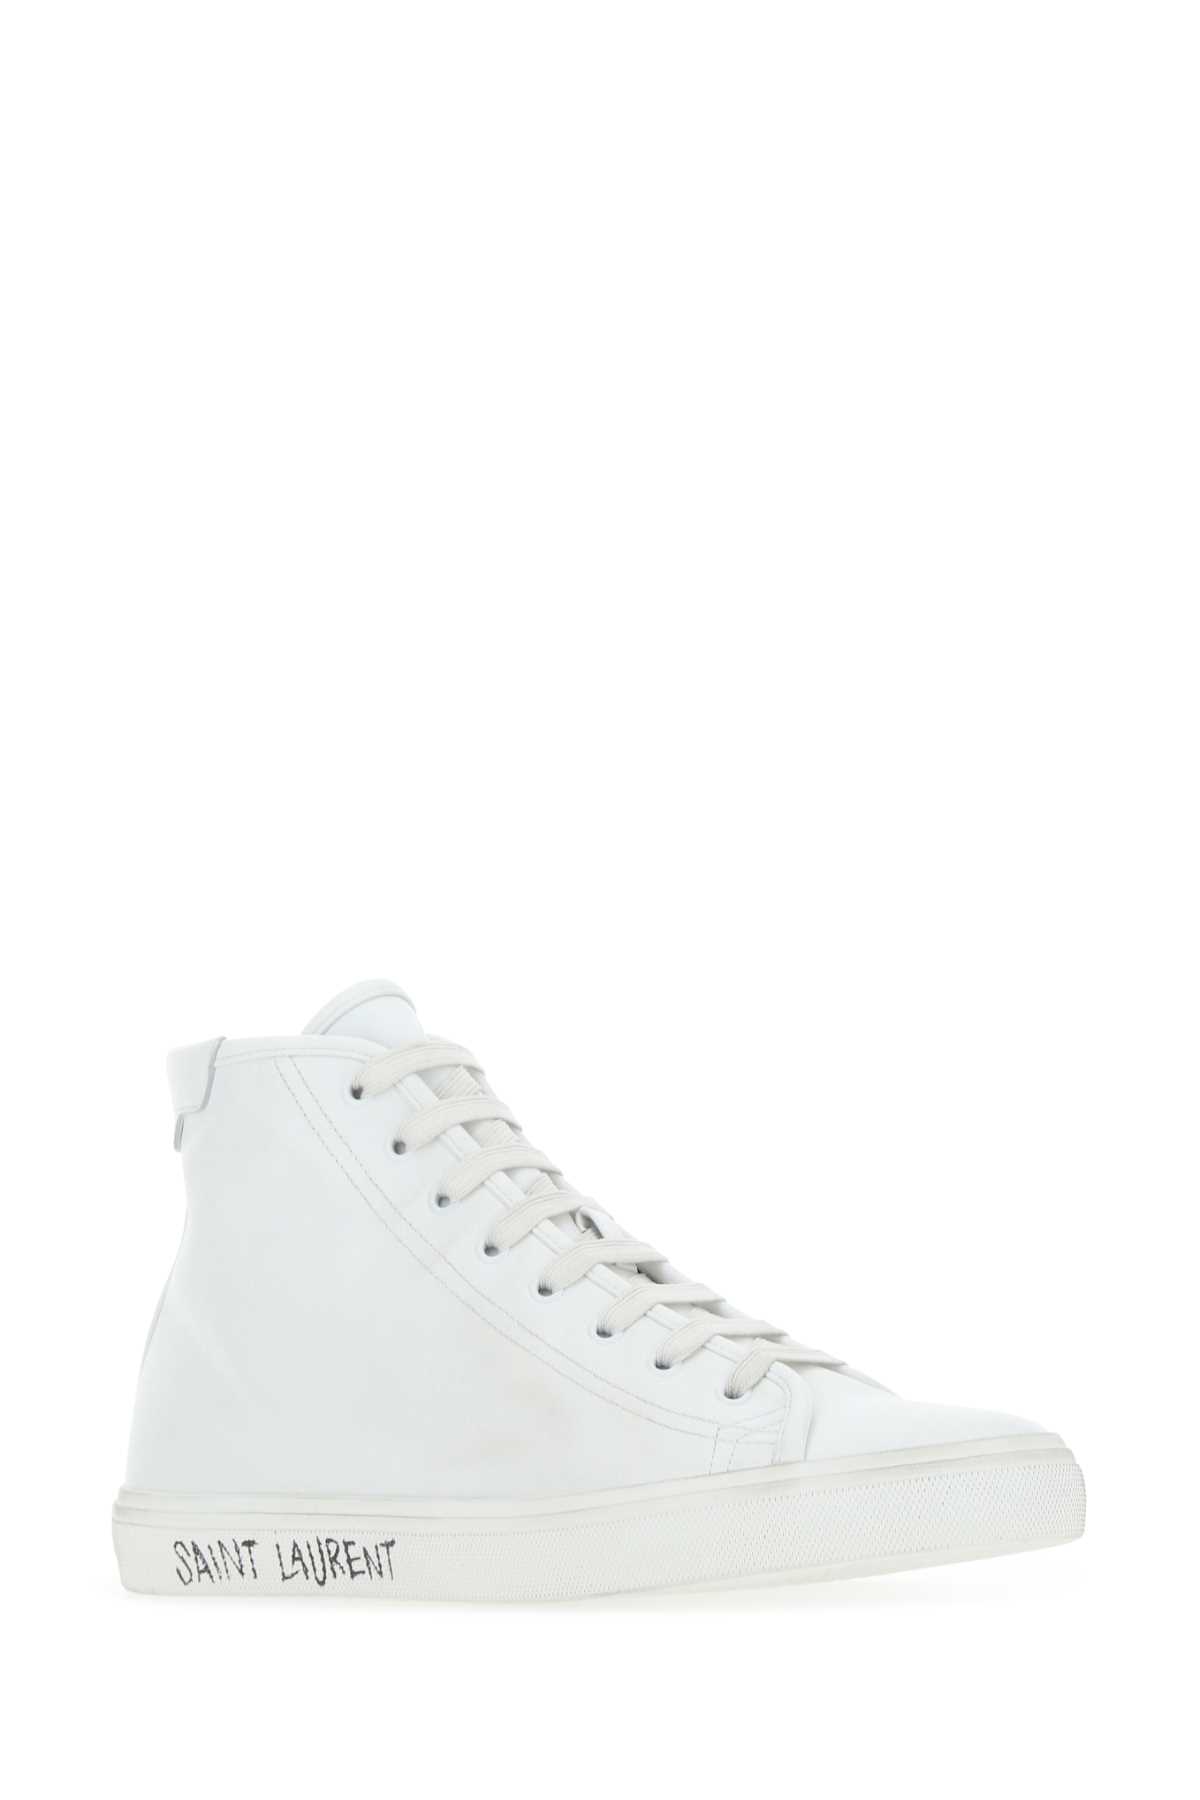 Shop Saint Laurent White Leather Malibu Sneakers In 9030